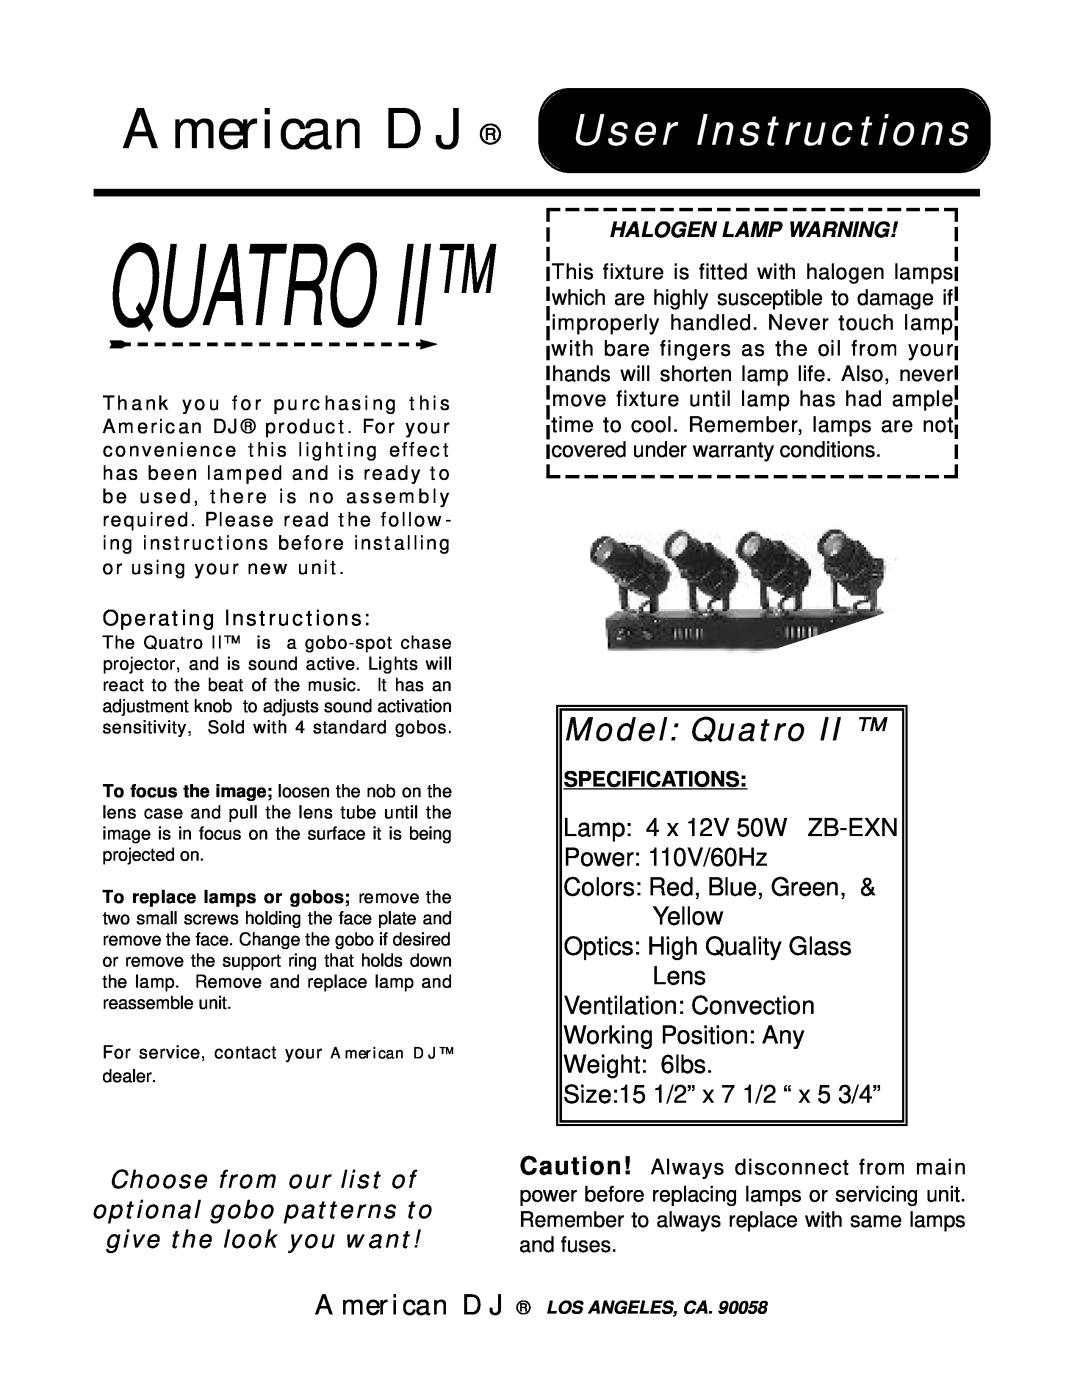 American DJ QUATRO II specifications American DJ User Instructions, Model Quatro, Choose from our list of 